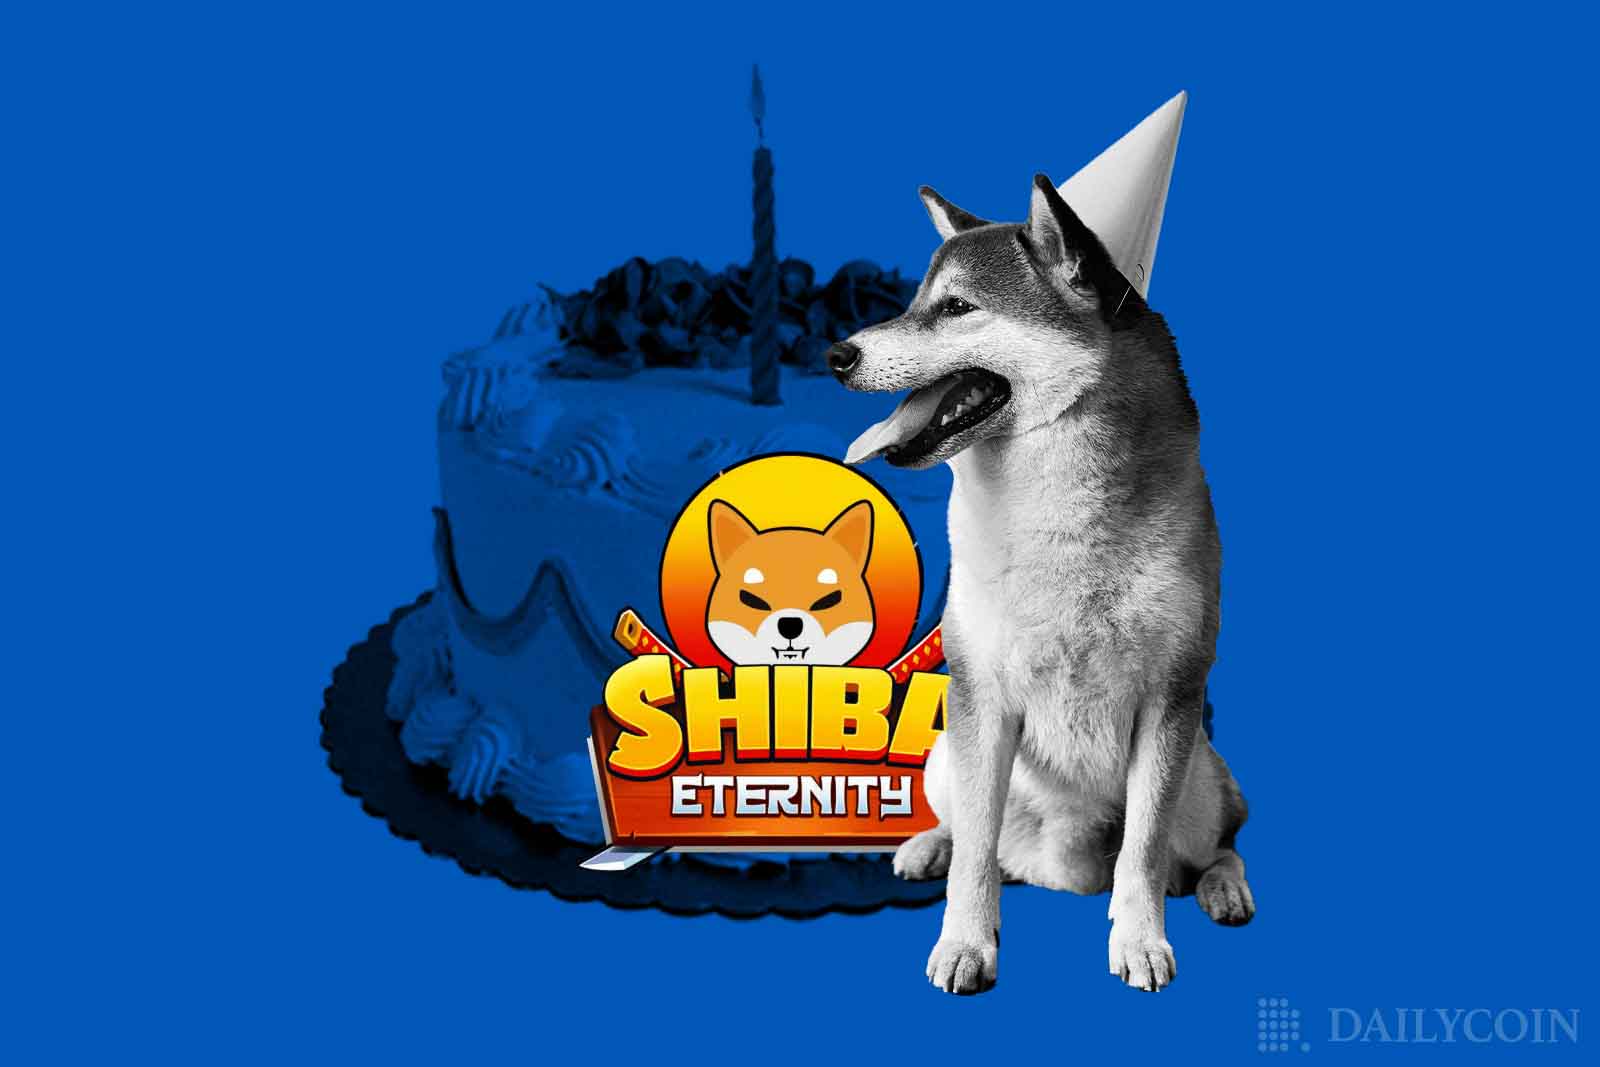 Shiba Inu (SHIB) Reveals ‘Shiba Eternity’ In Celebration Of 2nd Anniversary